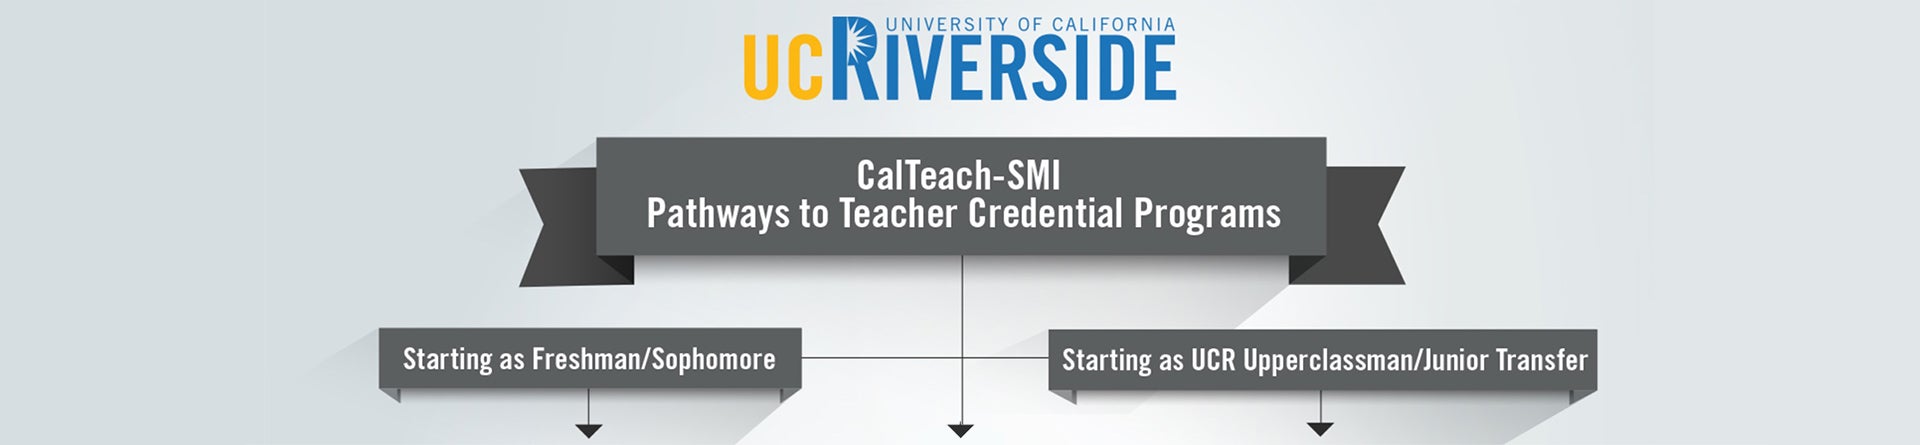 pathways to teacher credential programs (c) UCR